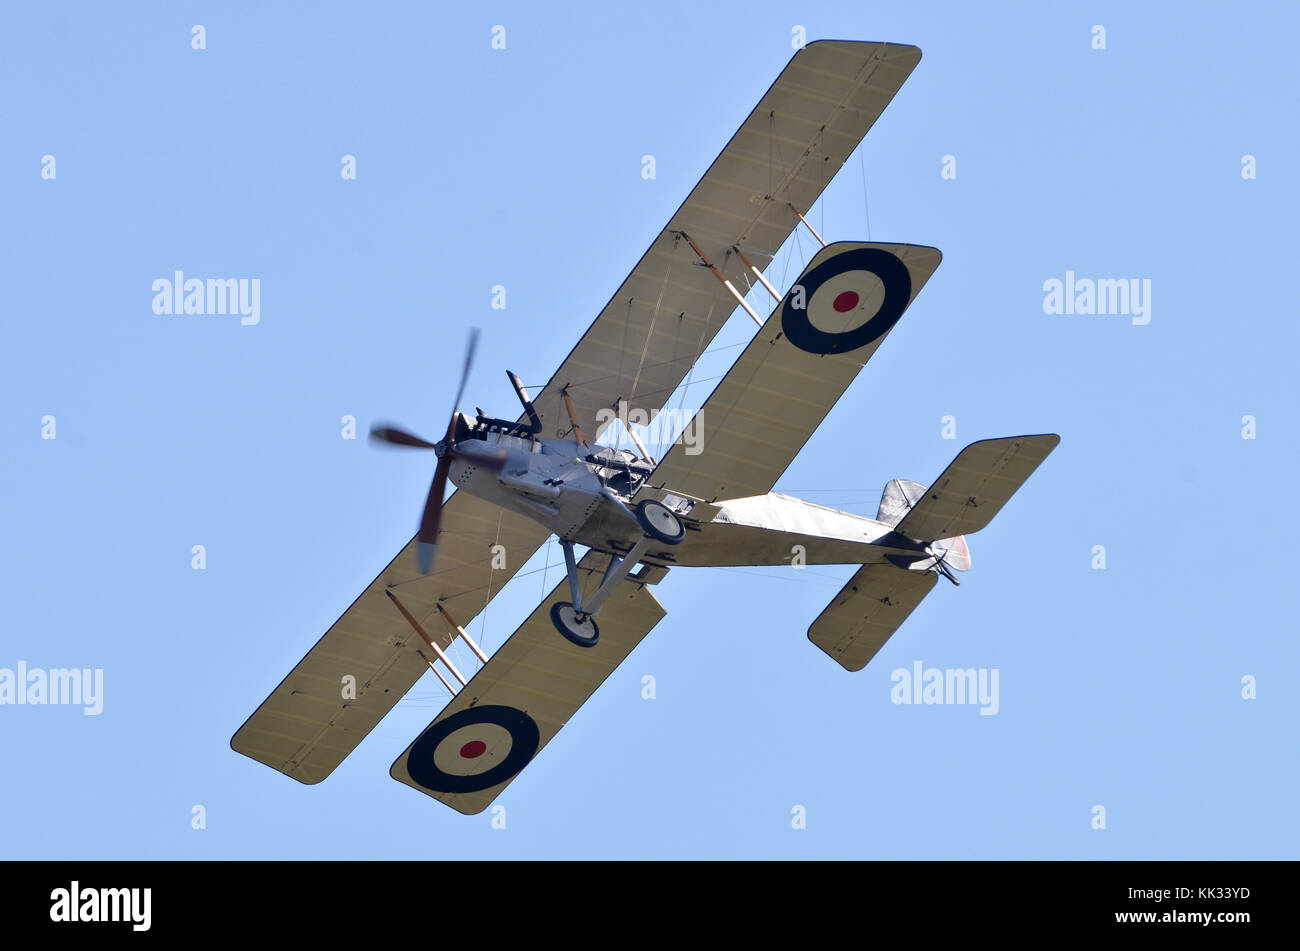 Royal Aircraft Establishment R.E 8 WW1 plane, Royal Flying Corps markings, Duxford, UK Stock Photo